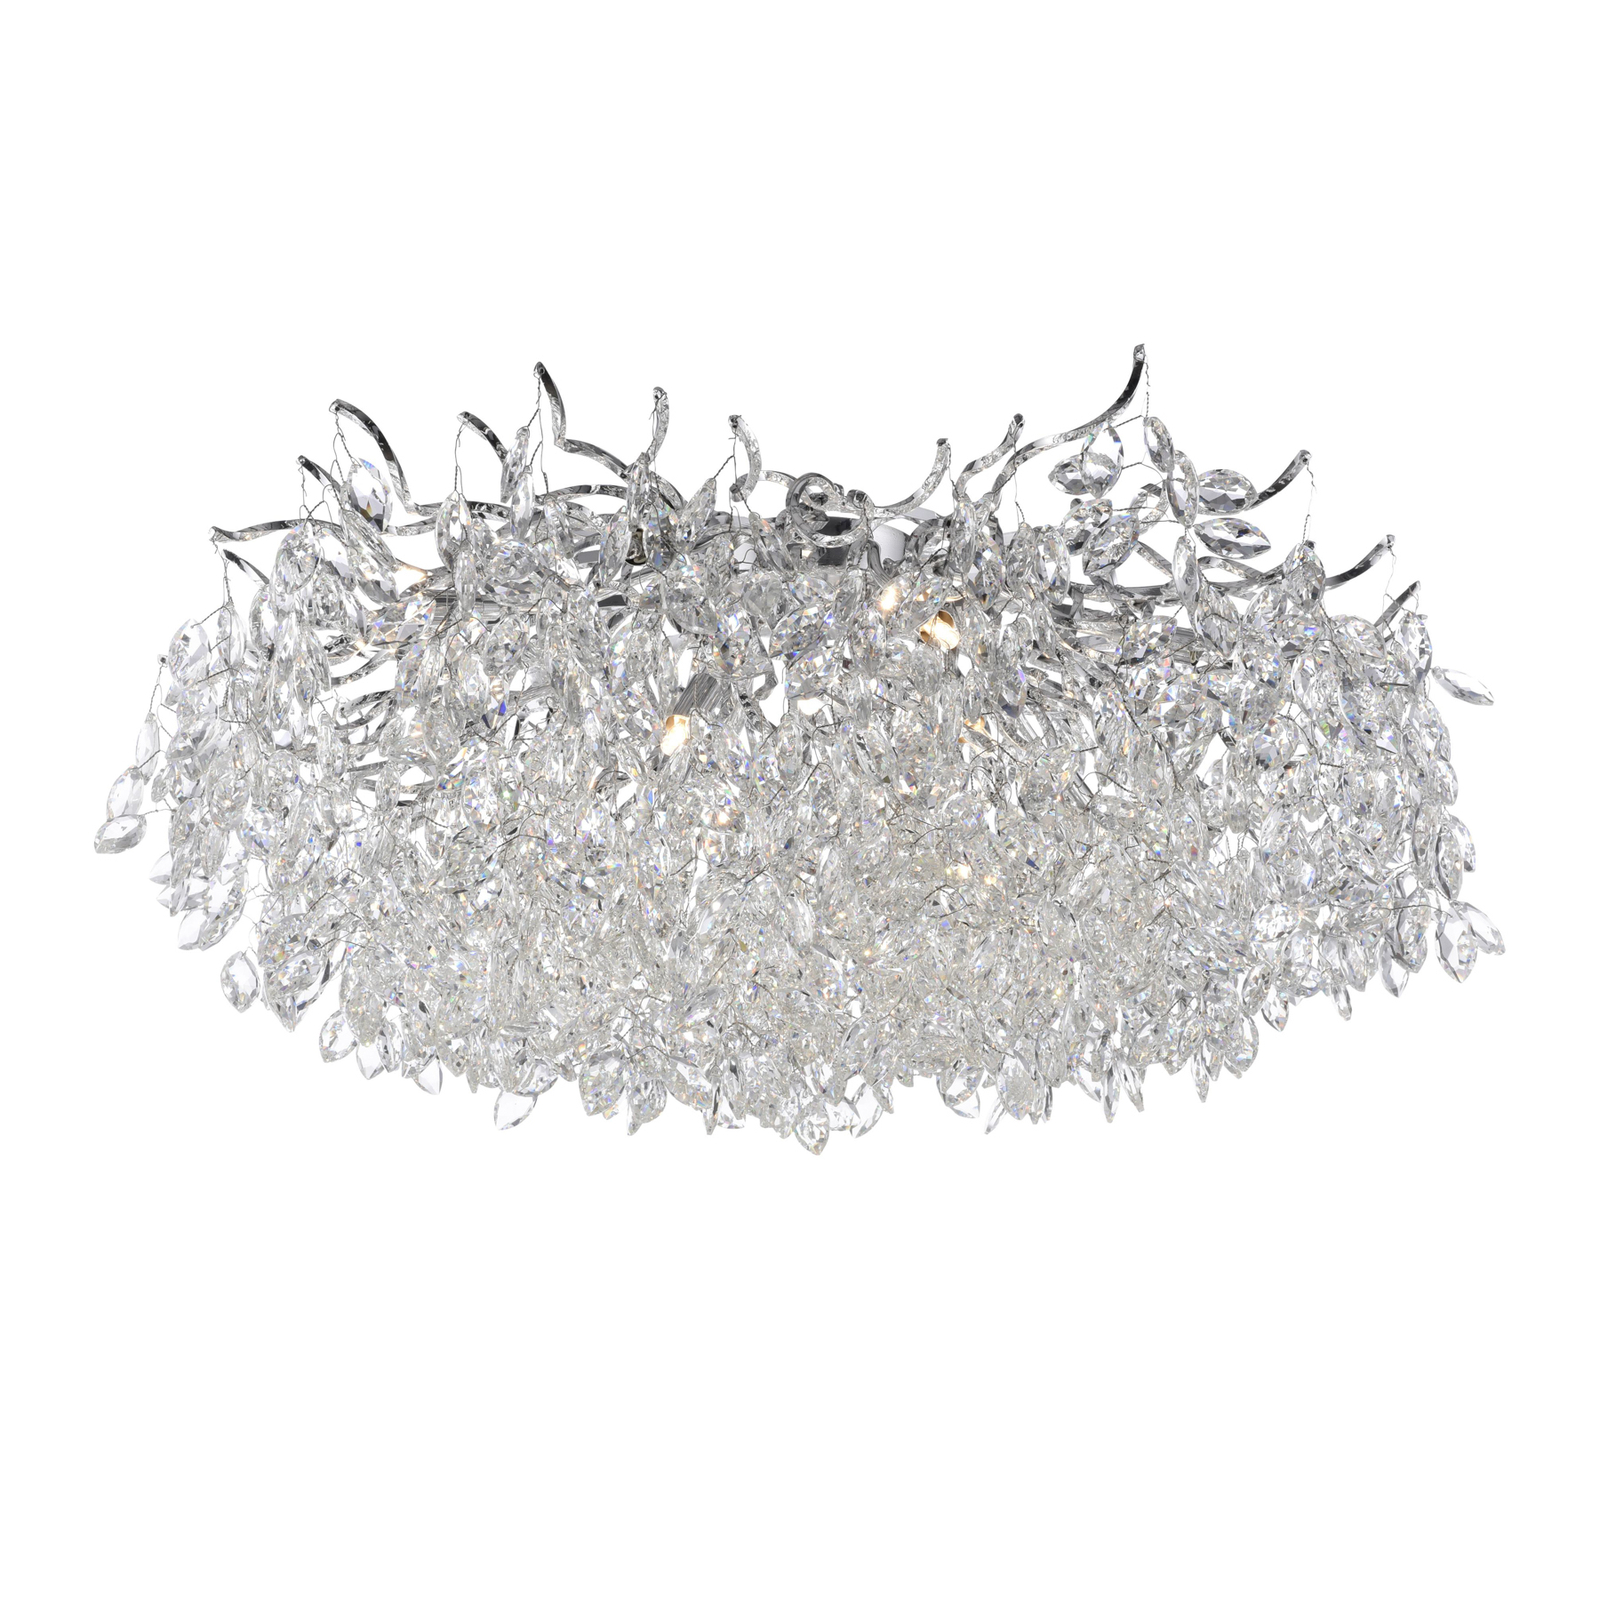 Paul Neuhaus Ricicle ceiling light, crystal pendant, Ø 80 cm